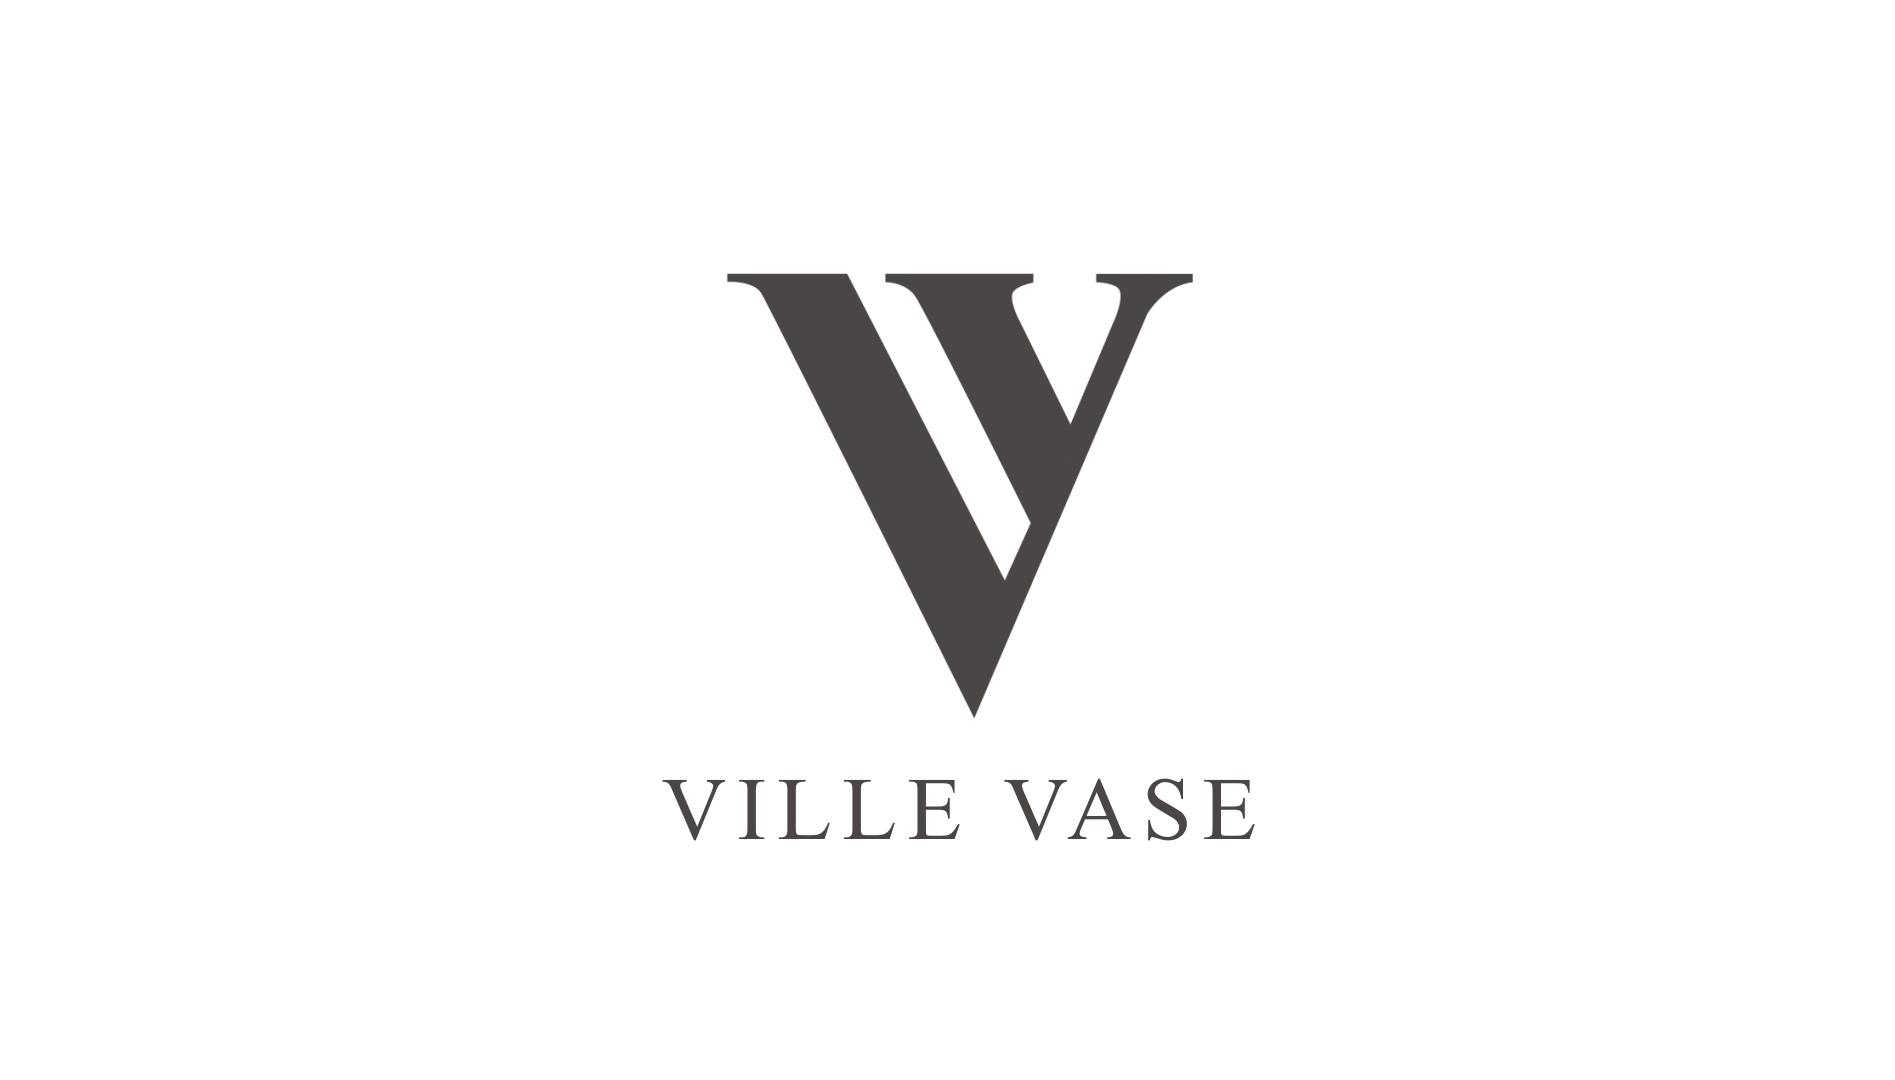 Ville Vase